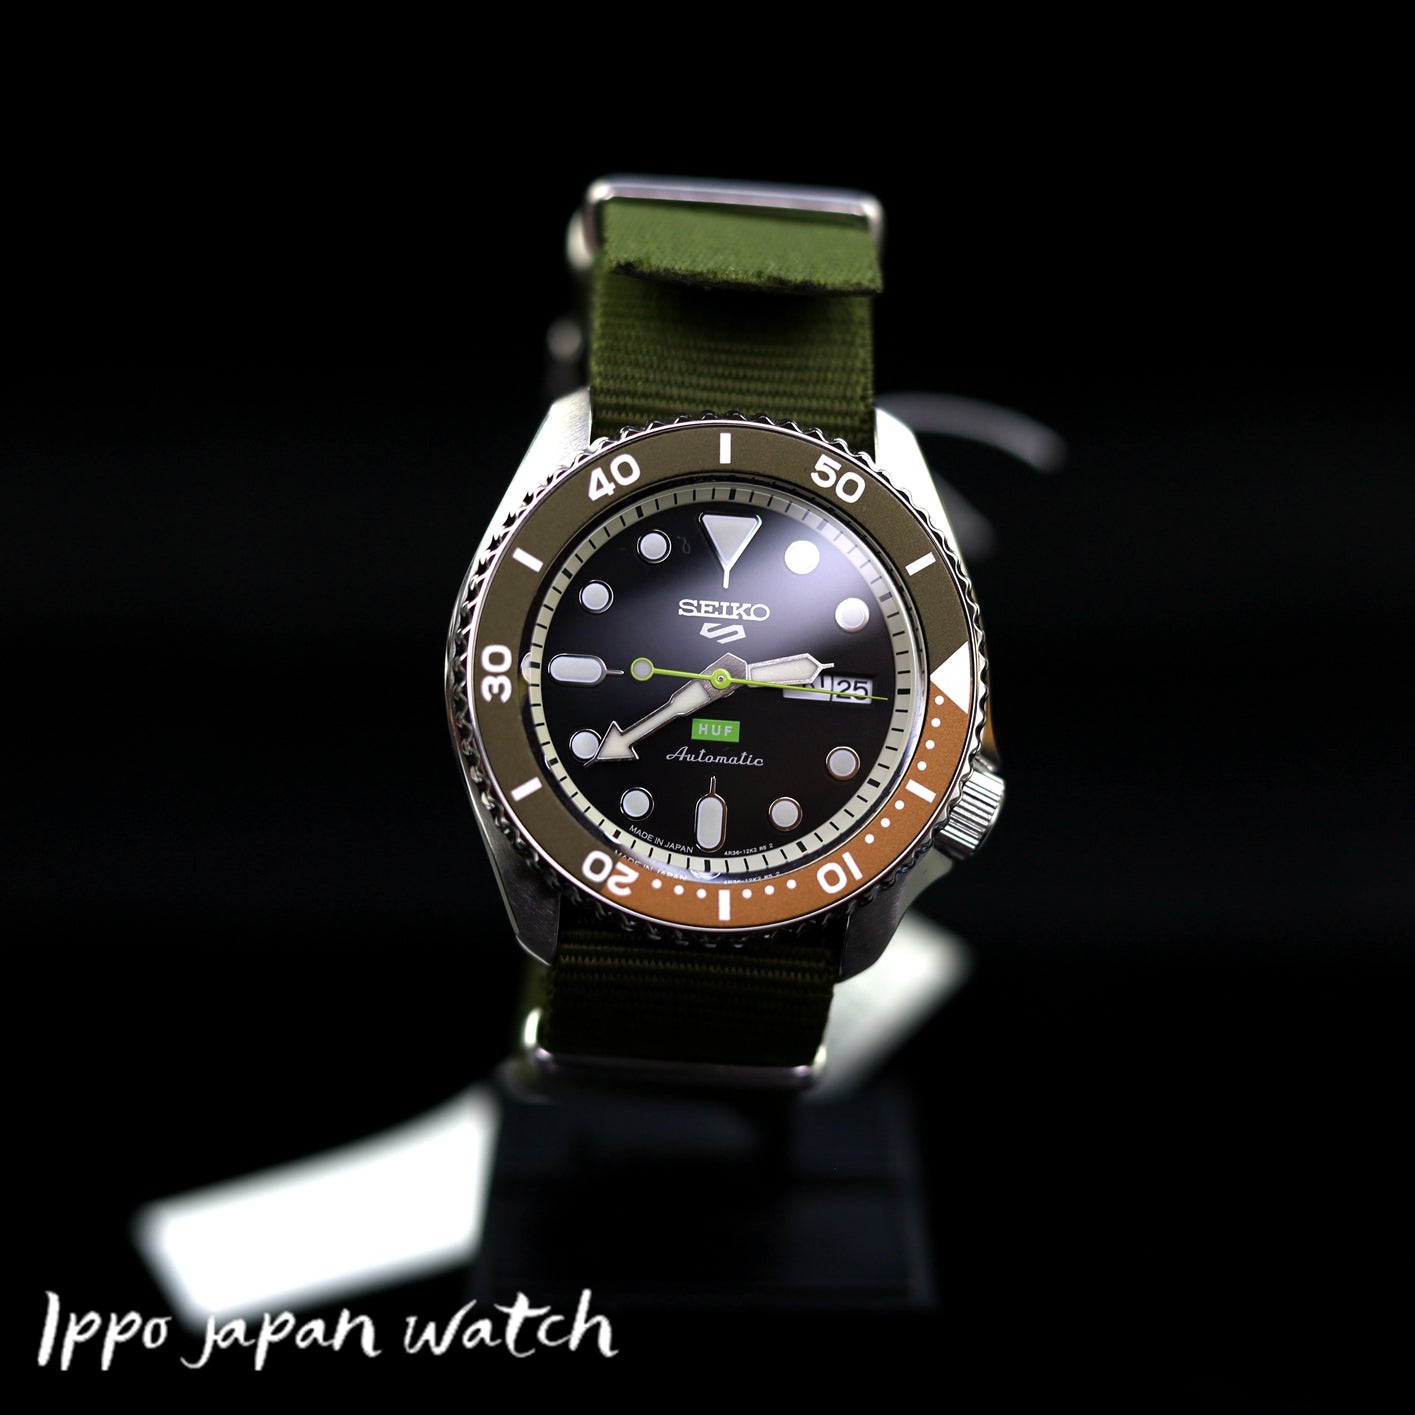 SEIKO 5 SBSA163 Mechanical 4R36 10 bar watch – IPPO JAPAN WATCH